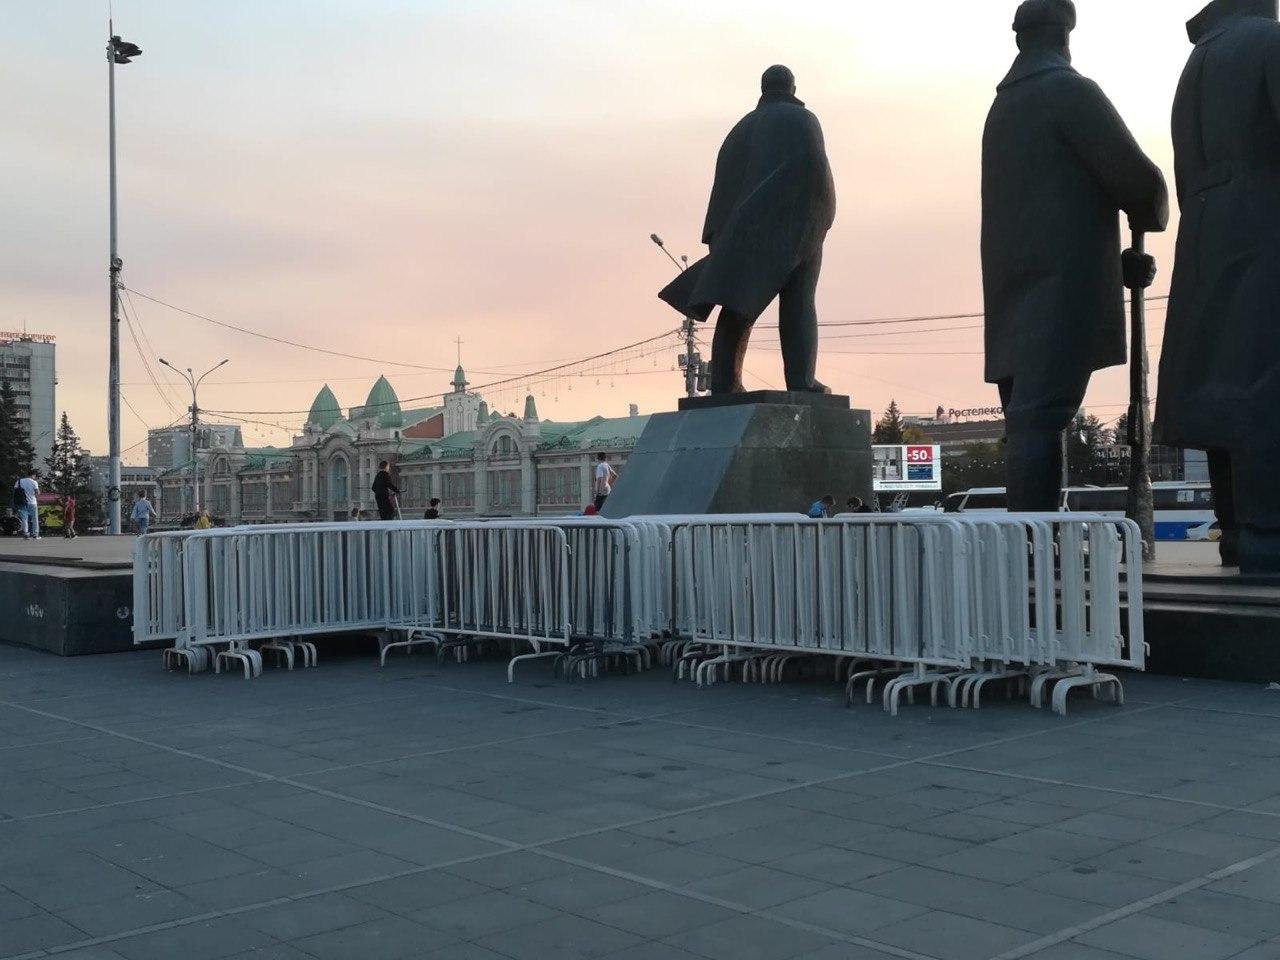 Мероприятие на площади ленина сегодня. Площадь Ленина Новосибирск. Памятник Ленину Новосиб. Новосибирск площадь Ленина полиция. Ленин на площади Ленина Новосибирск.